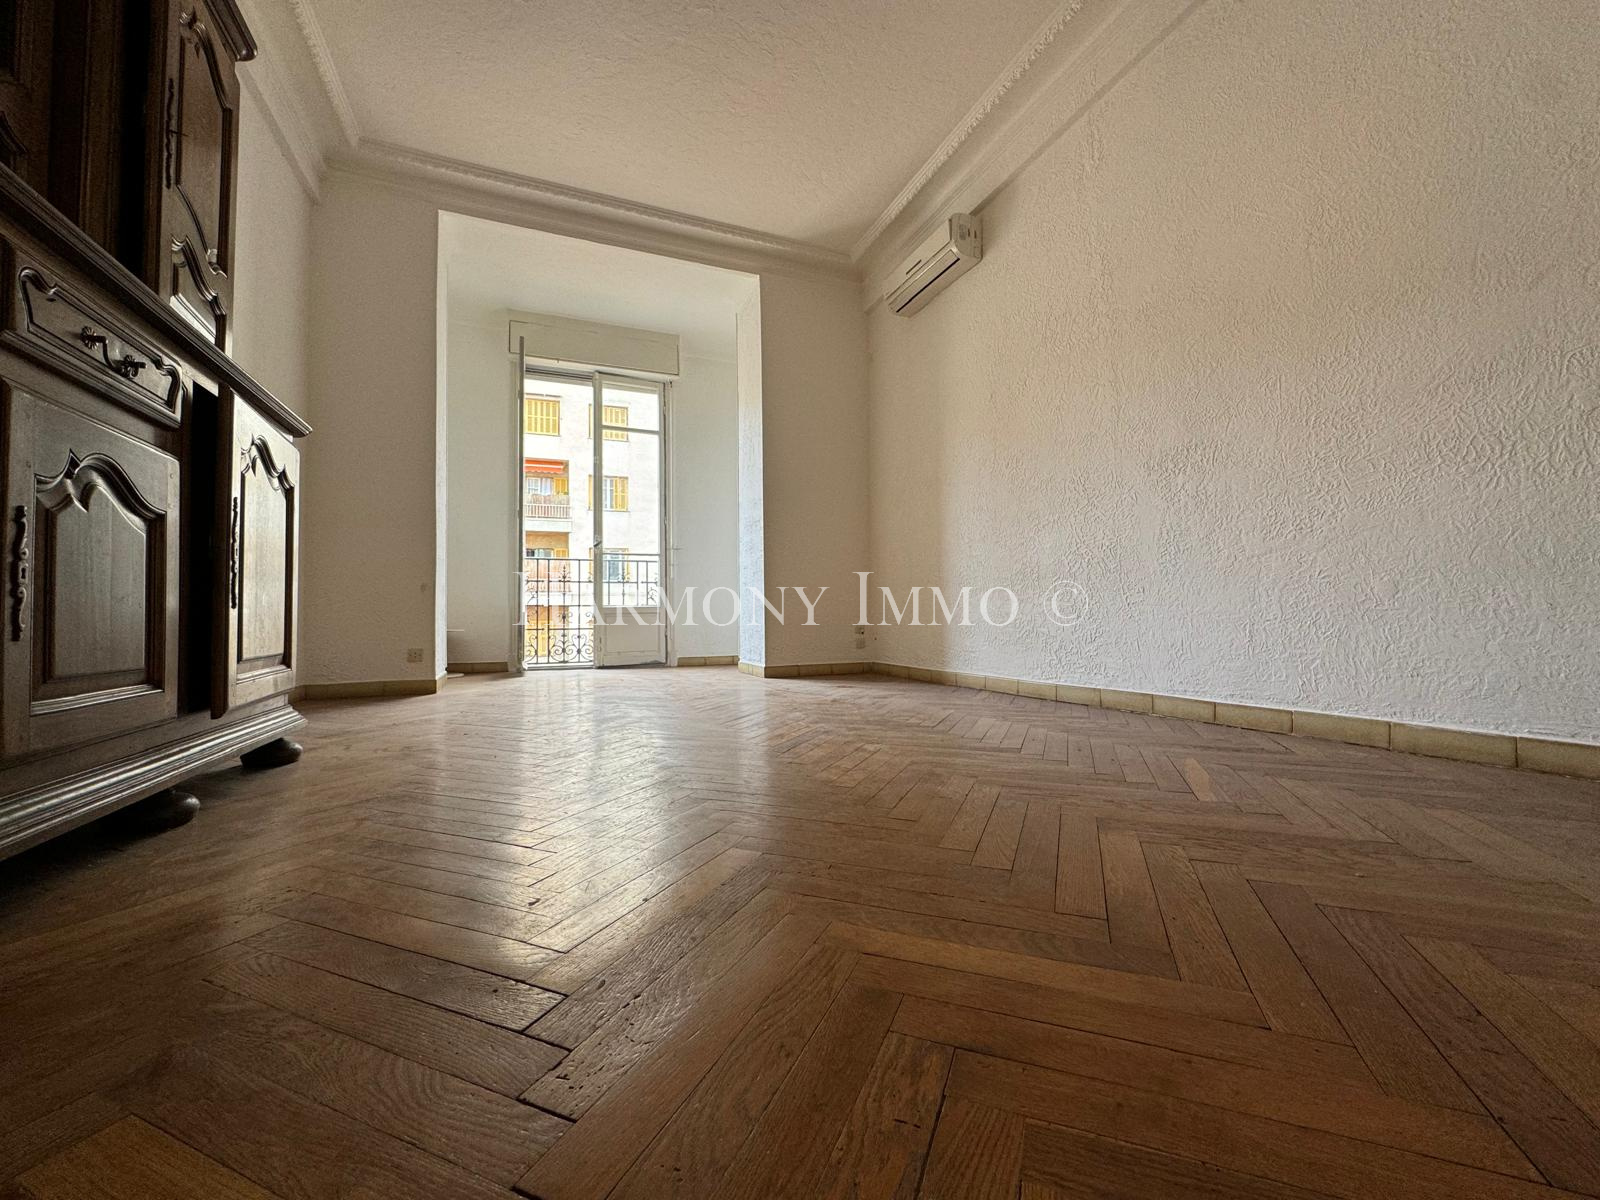 Vente Appartement 76m² 3 Pièces à Nice (06000) - Harmony Immo